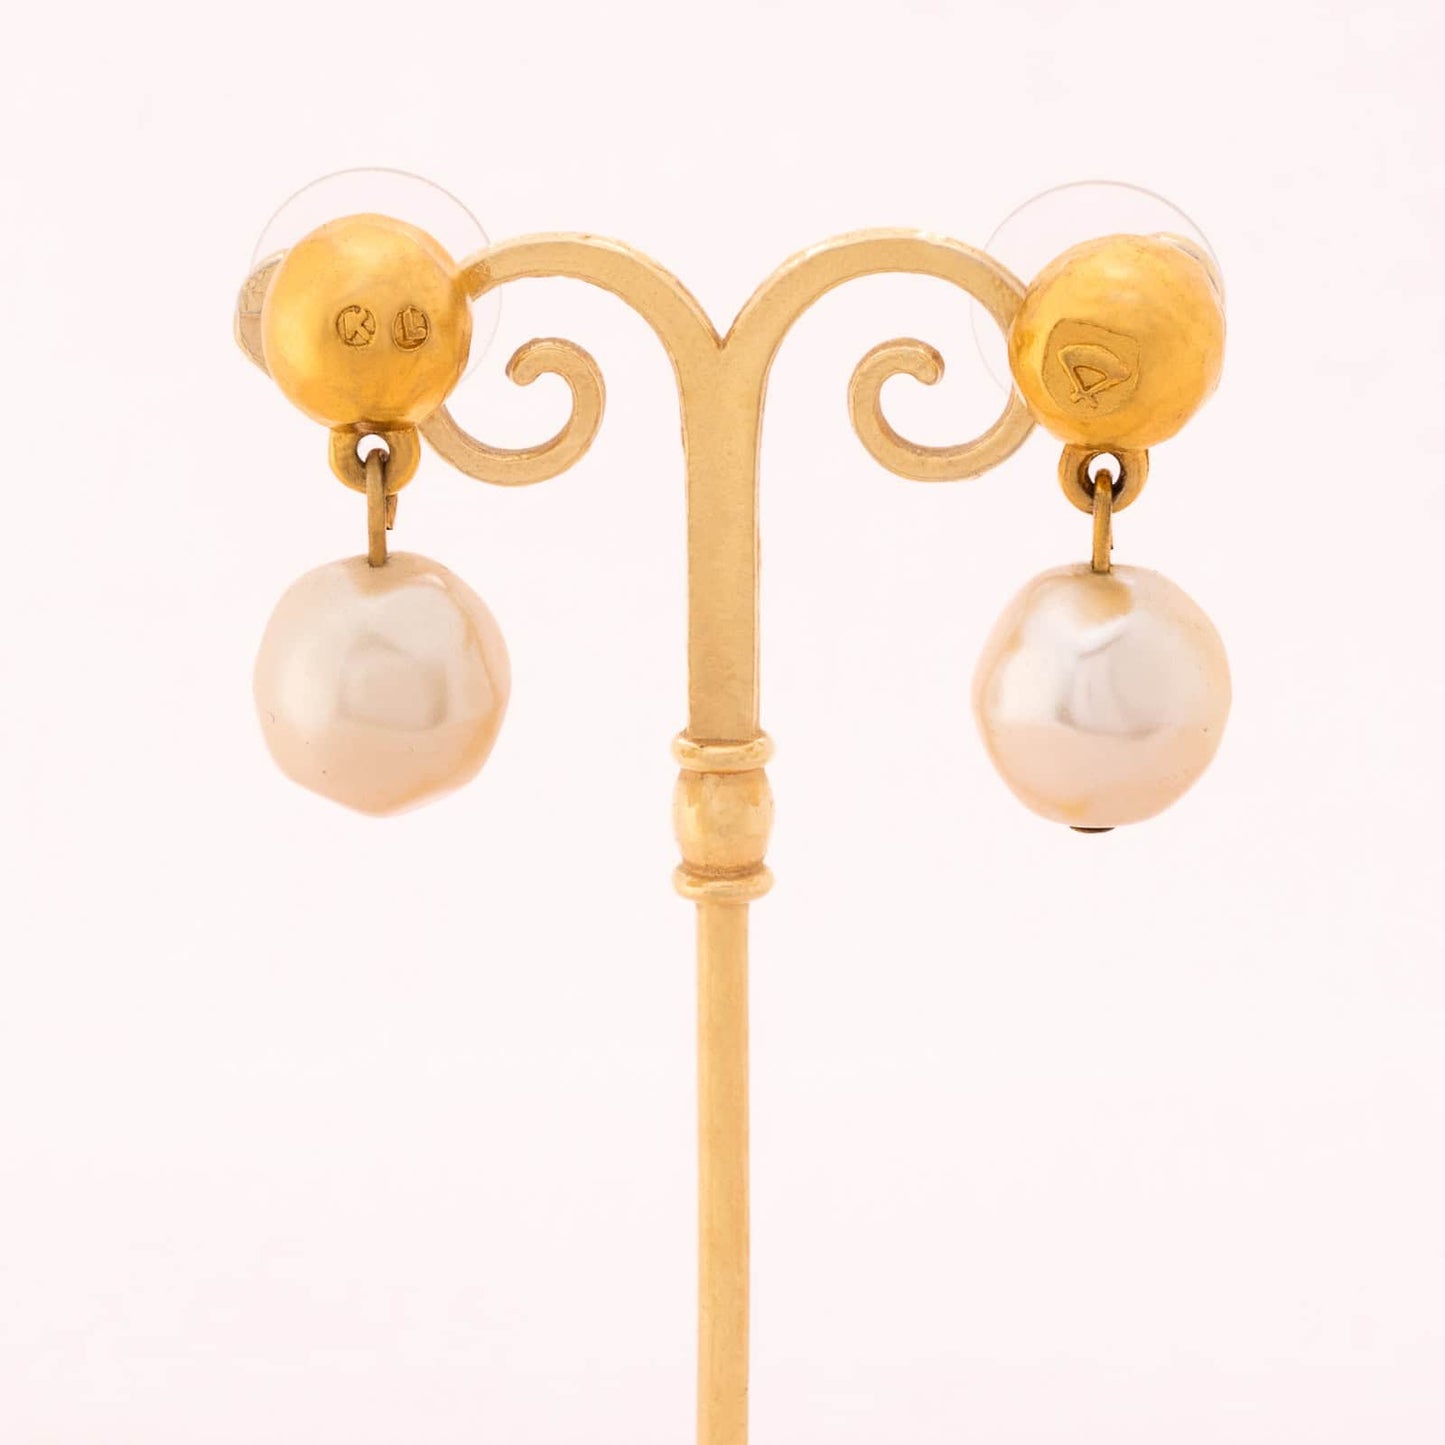 KARL LAGERFELD matt gold-plated earrings with pearl dangles